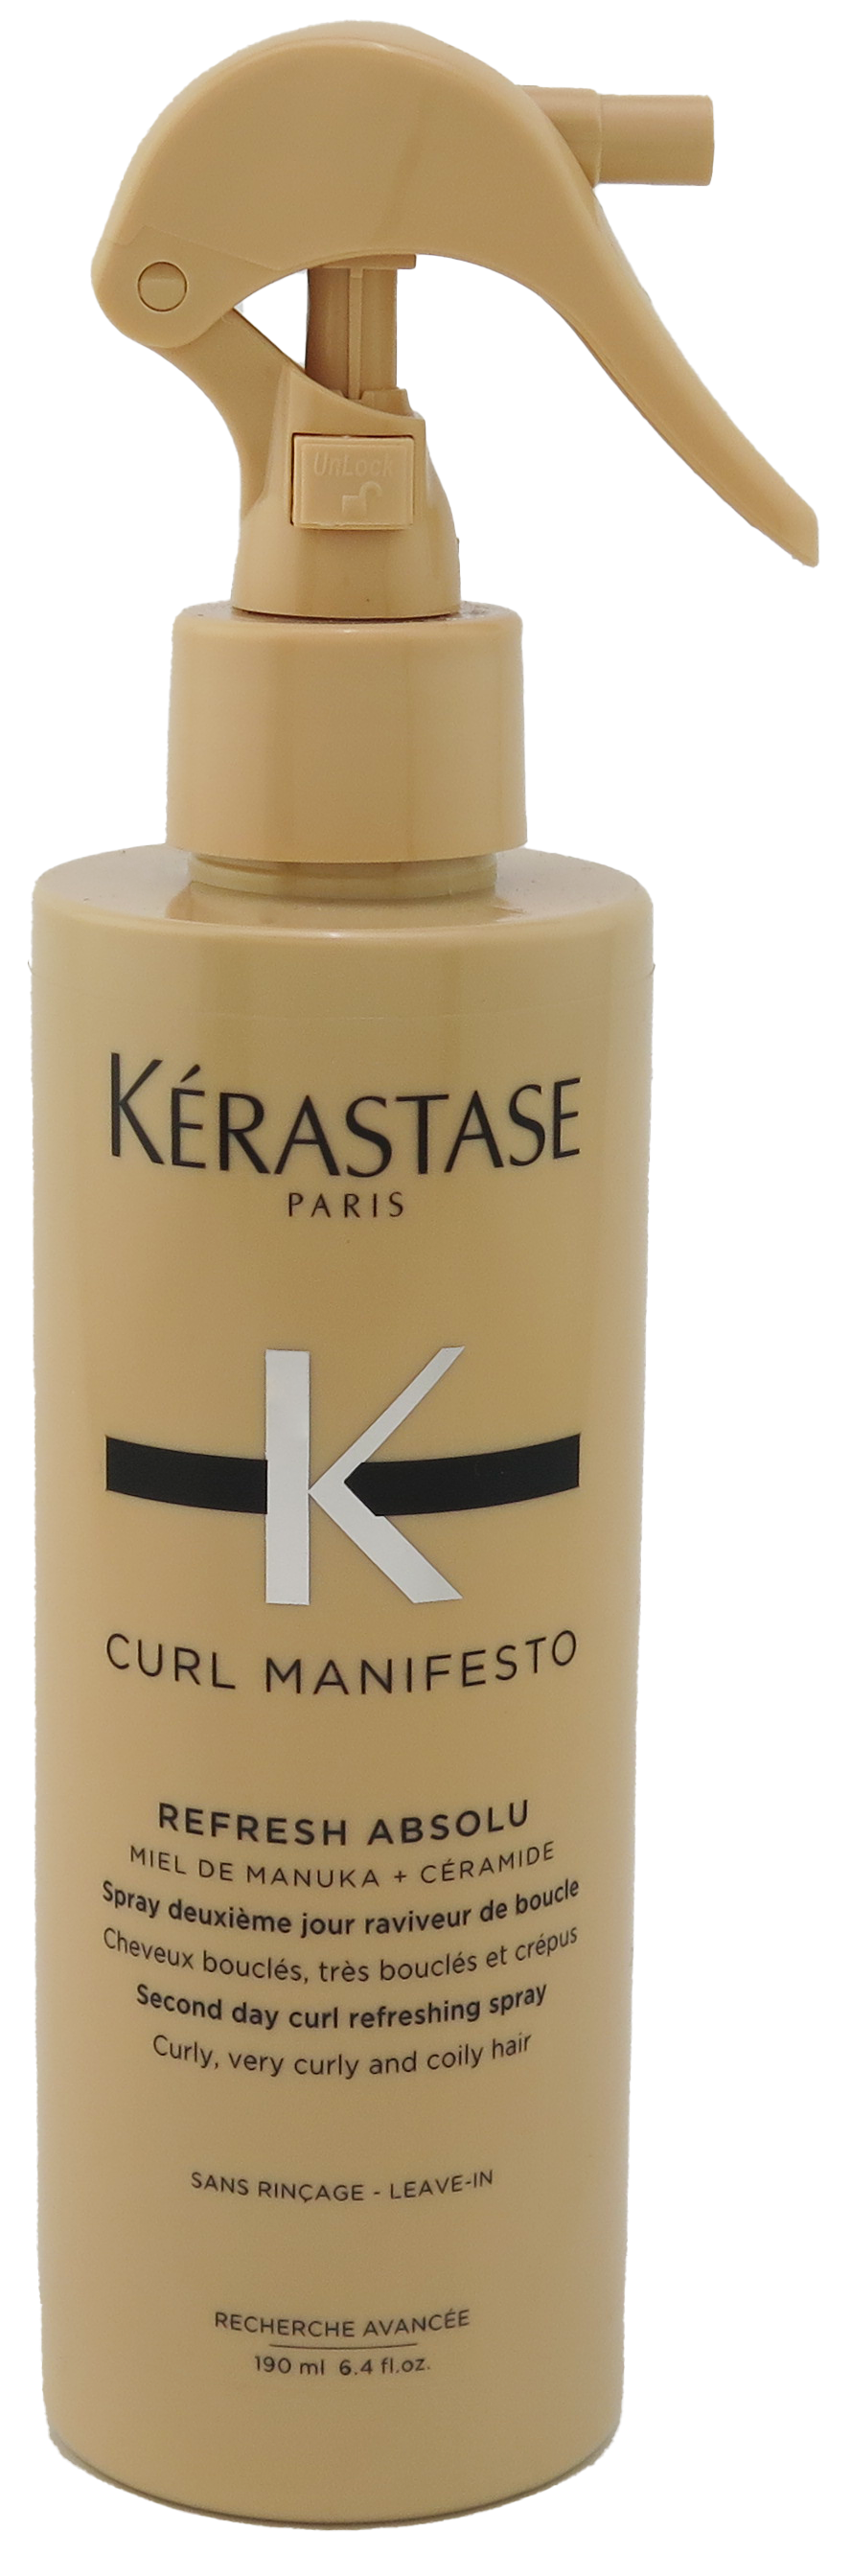 Kerastase Curl Manifesto Refresh Absolu 6.4 fl oz